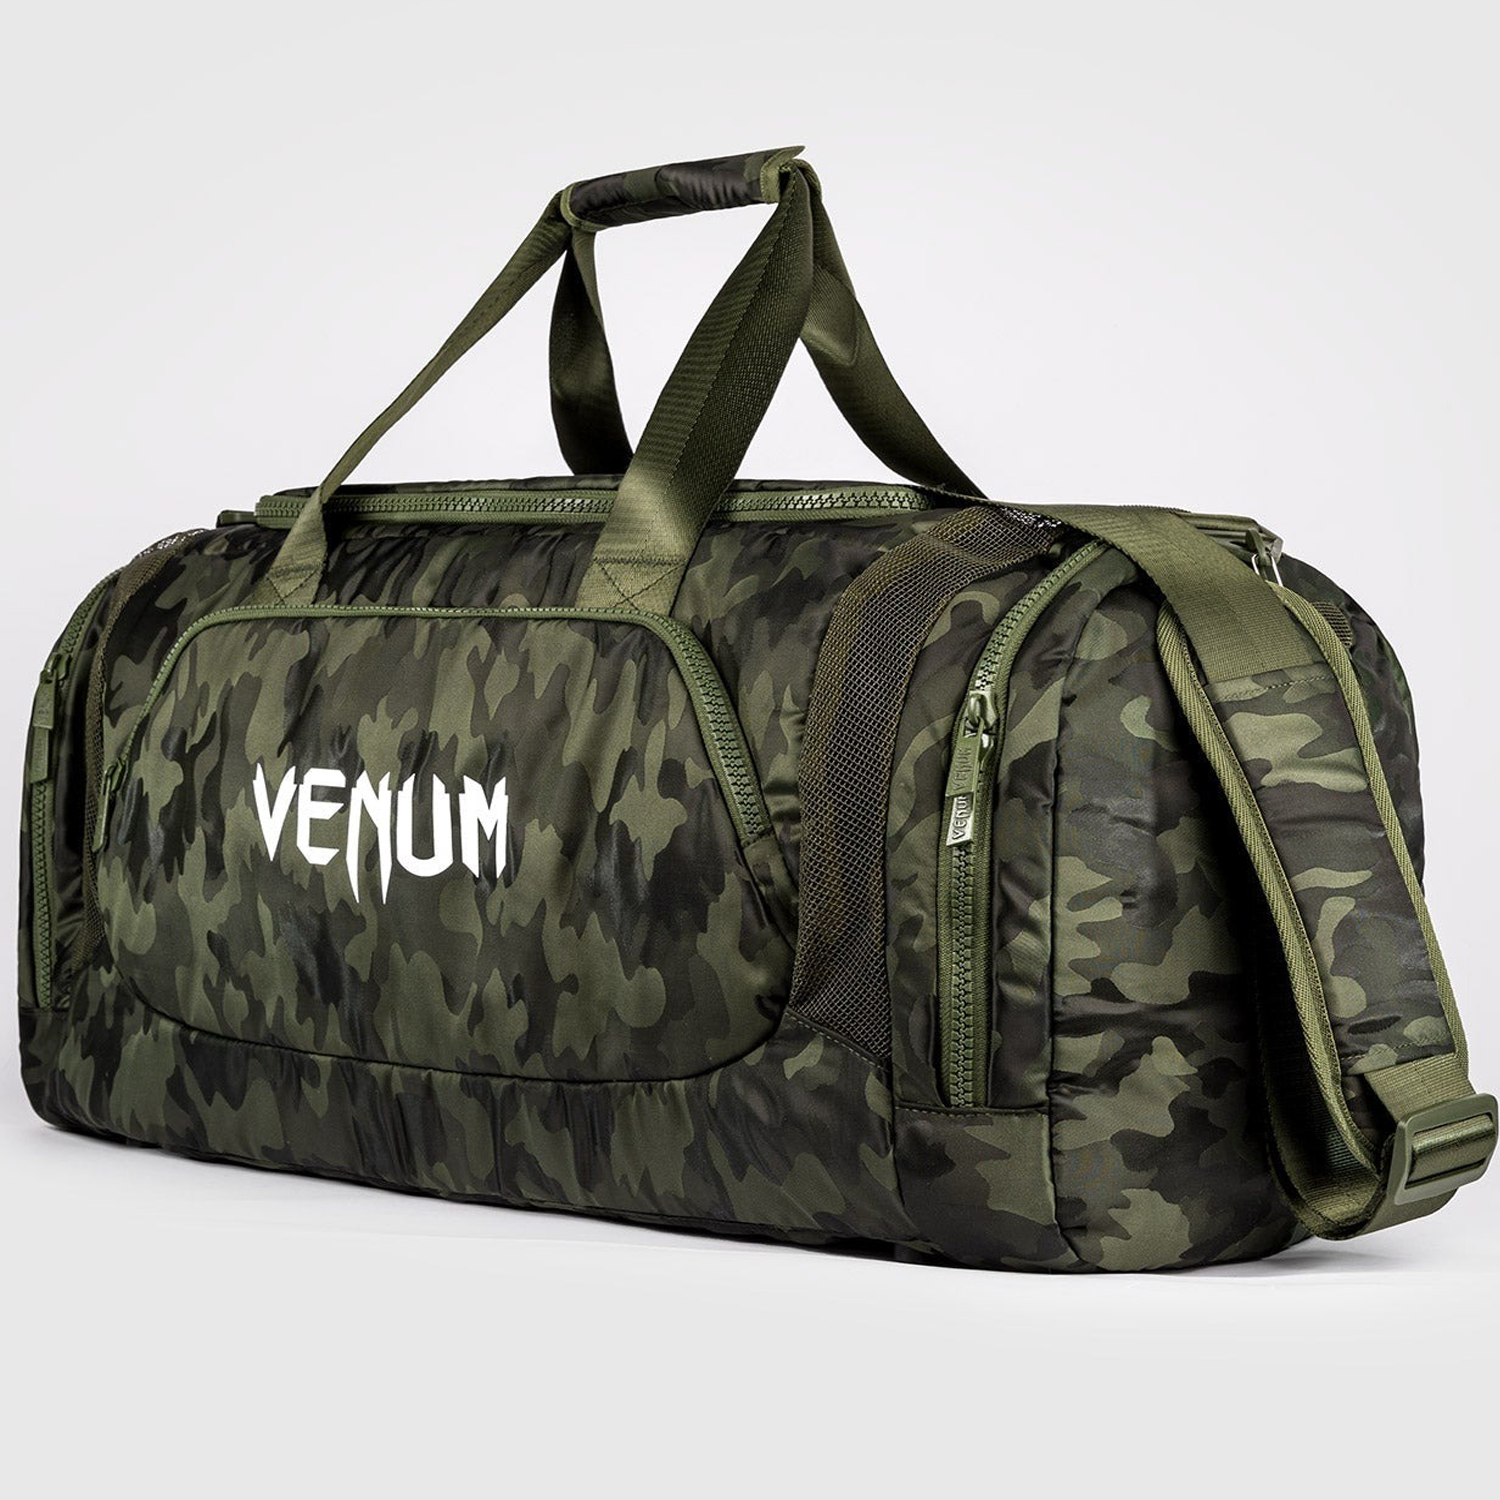 Sac de sport Venum Trainer Lite Camouflage - Kaki